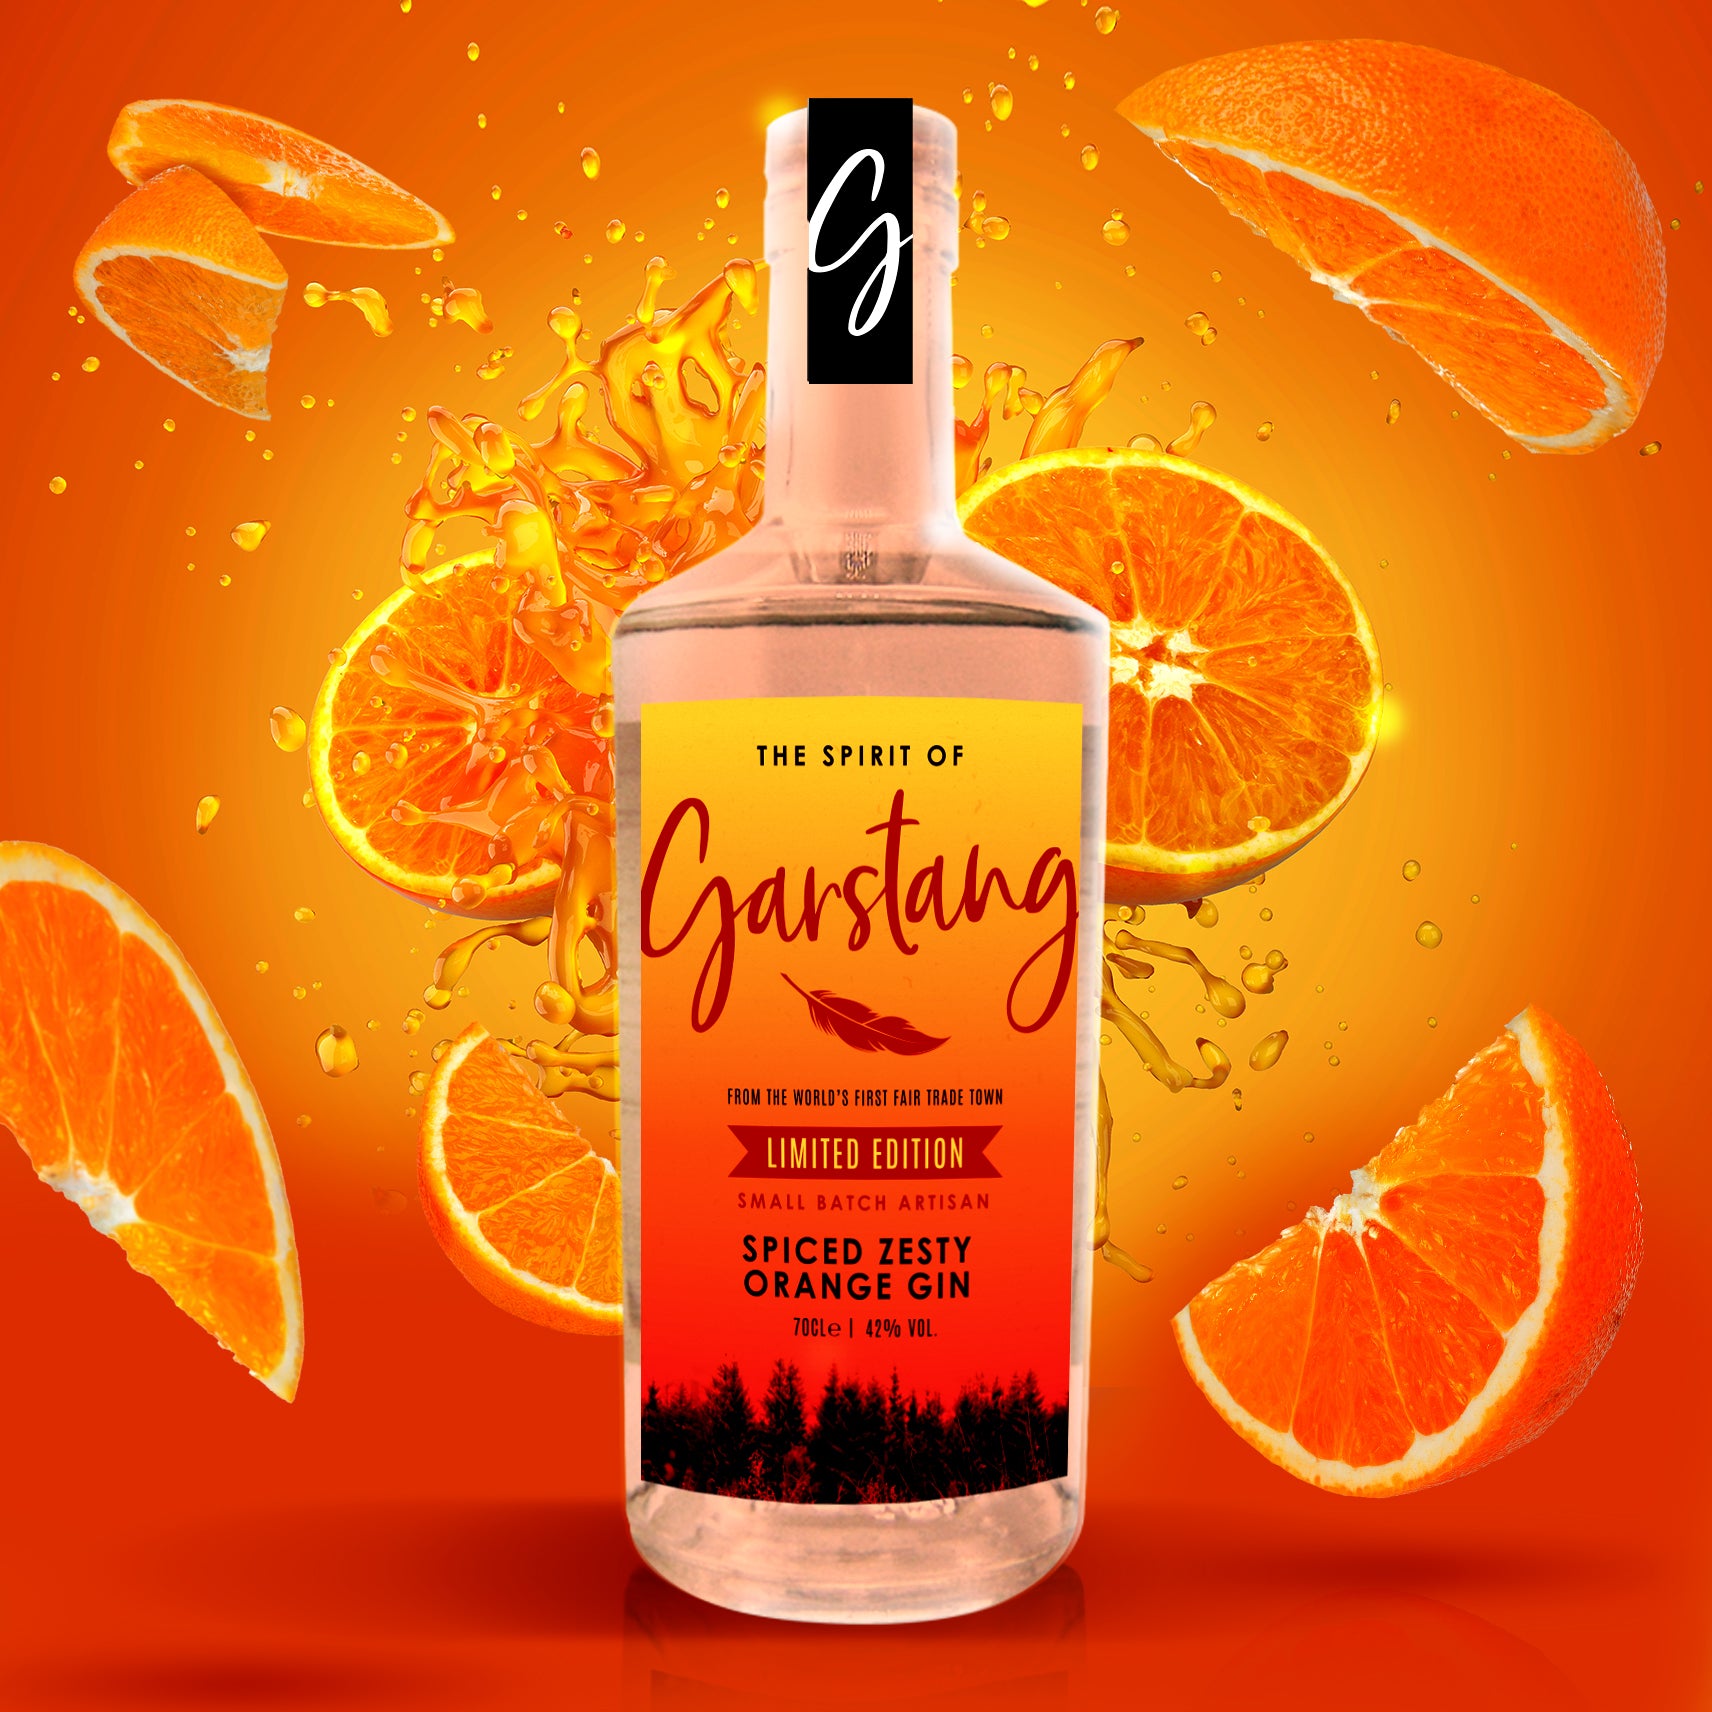 Spiced Zesty Orange Gin Gin Spirit of Garstang – The